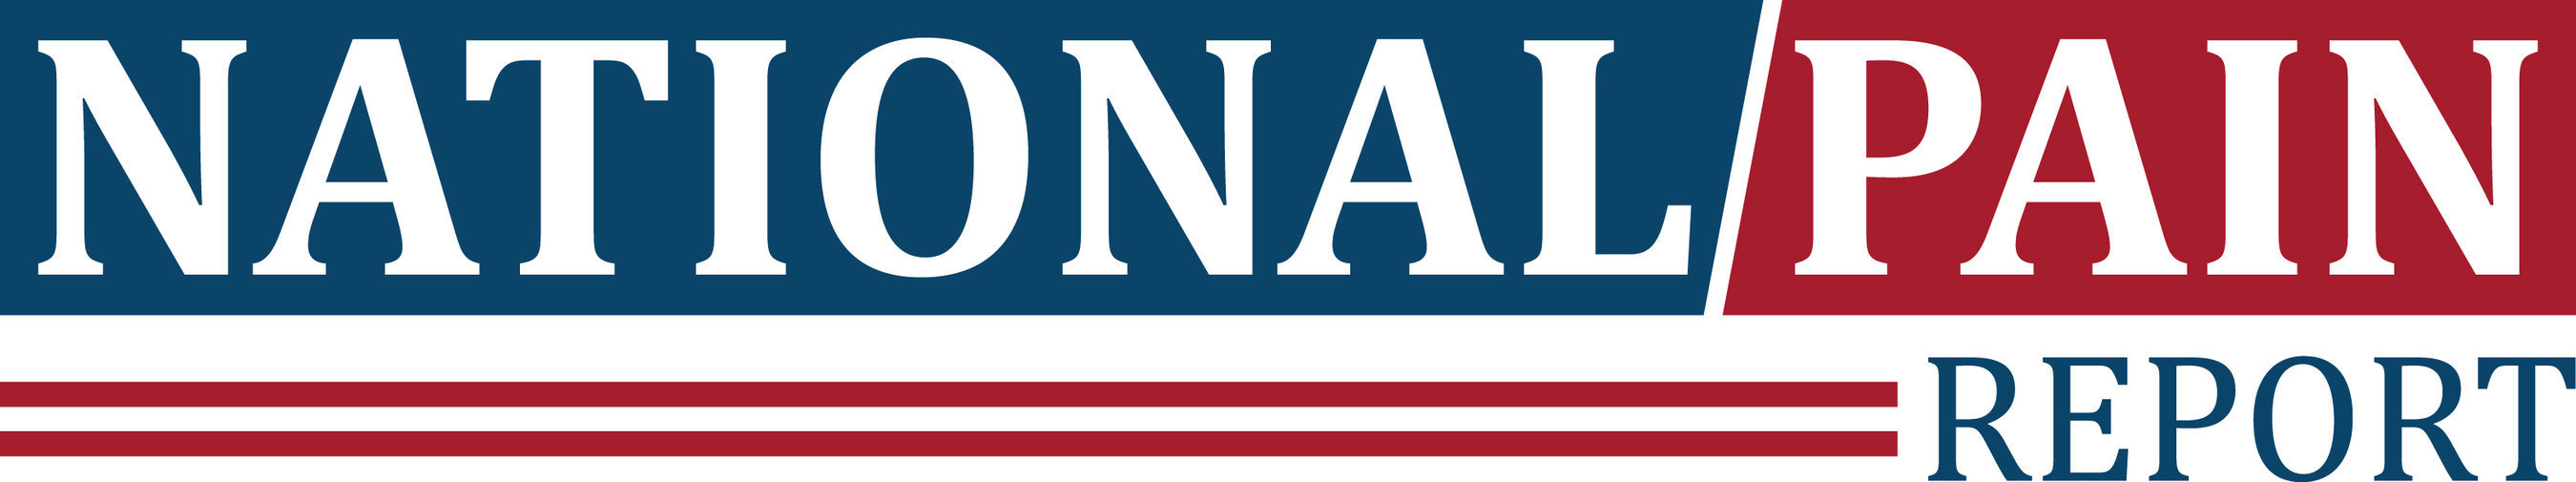 National Pain Report logo (PRNewsFoto/National Pain Report)